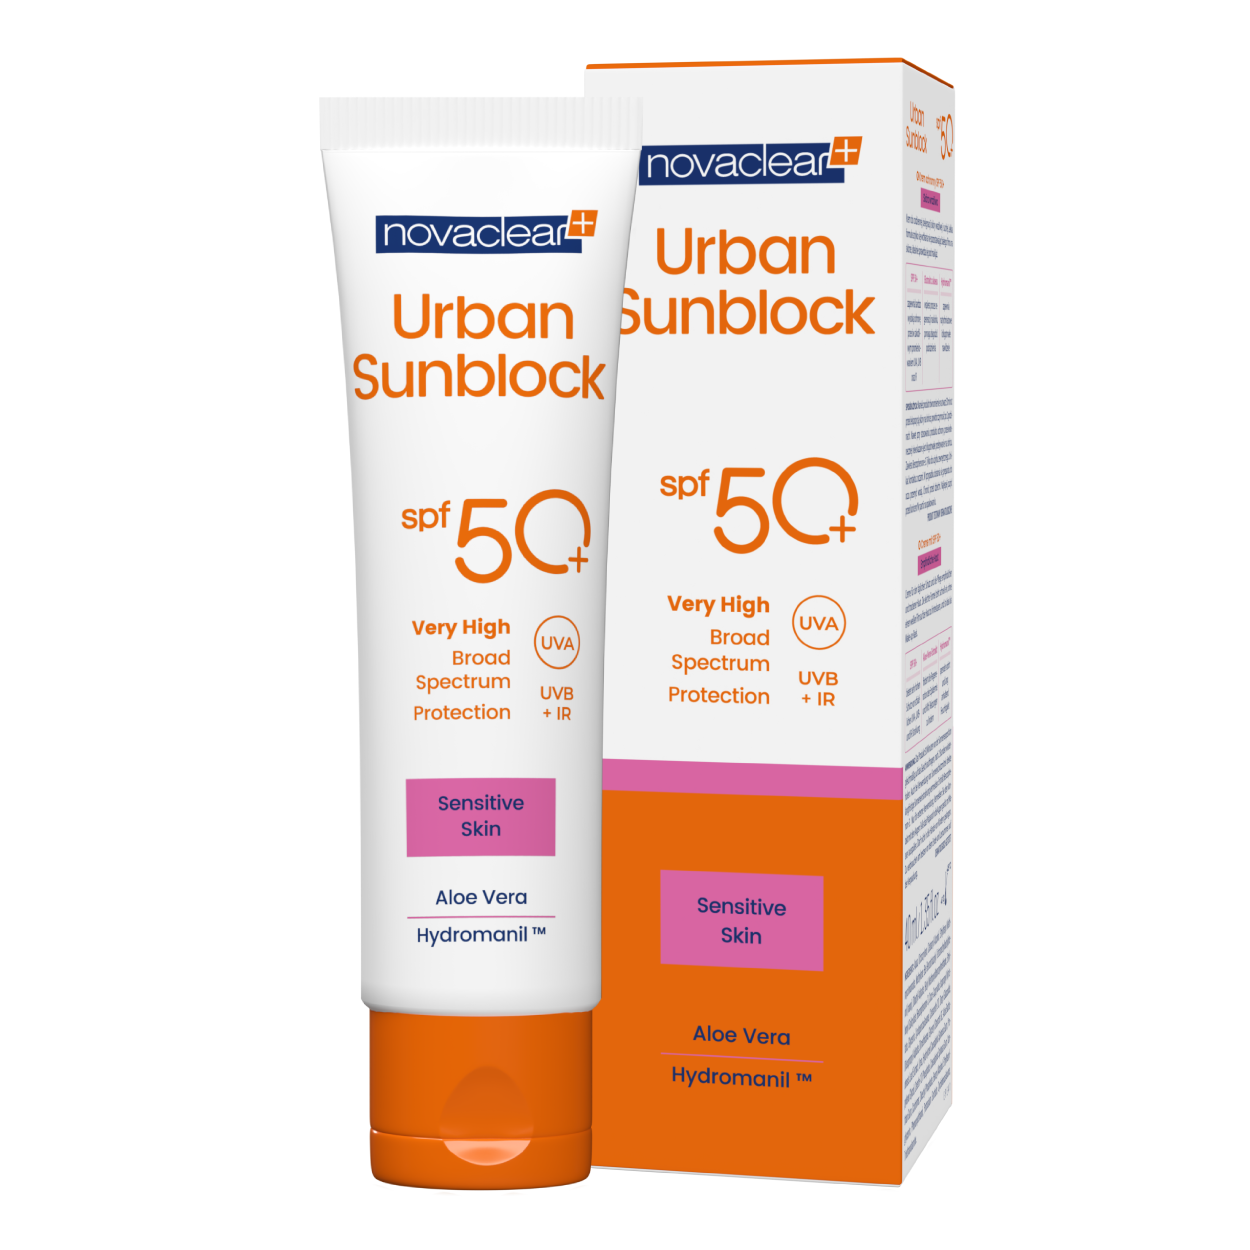 novaclear-urban-sunblock-very-high-protection-spf-50+-sensitive-skin